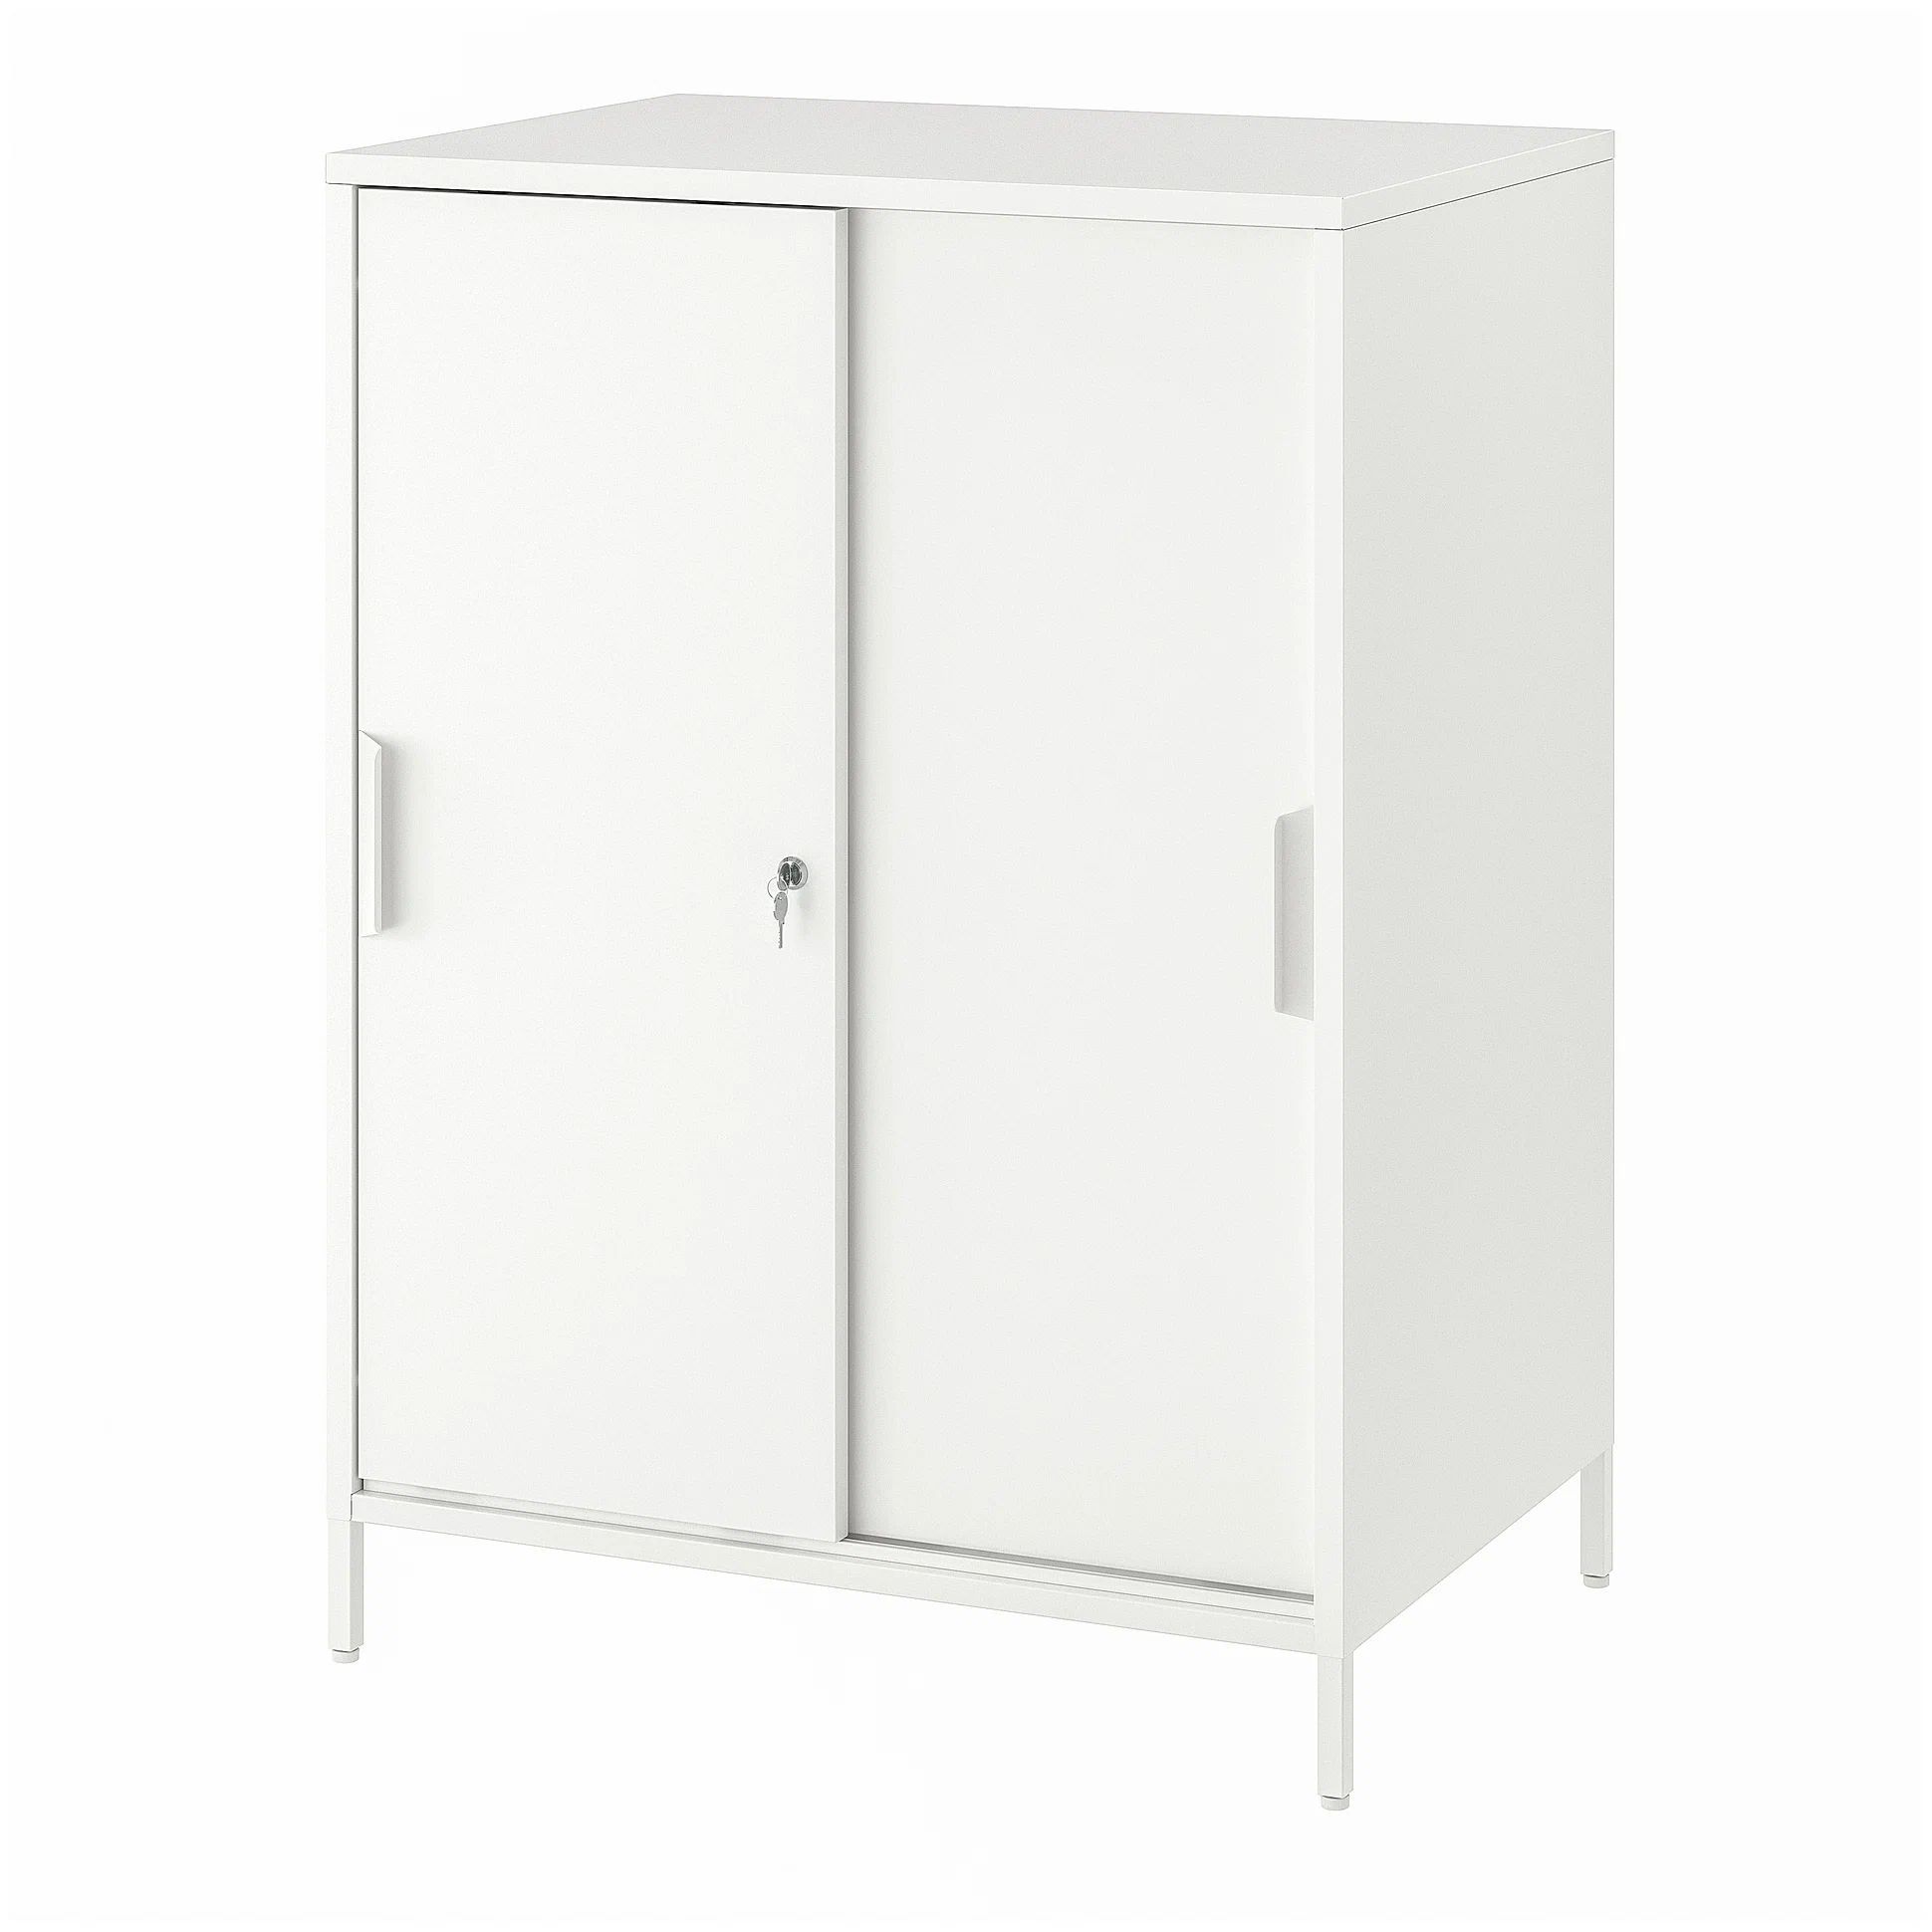 Ikea Trotten Троттен шкаф с раздвижными дверцами